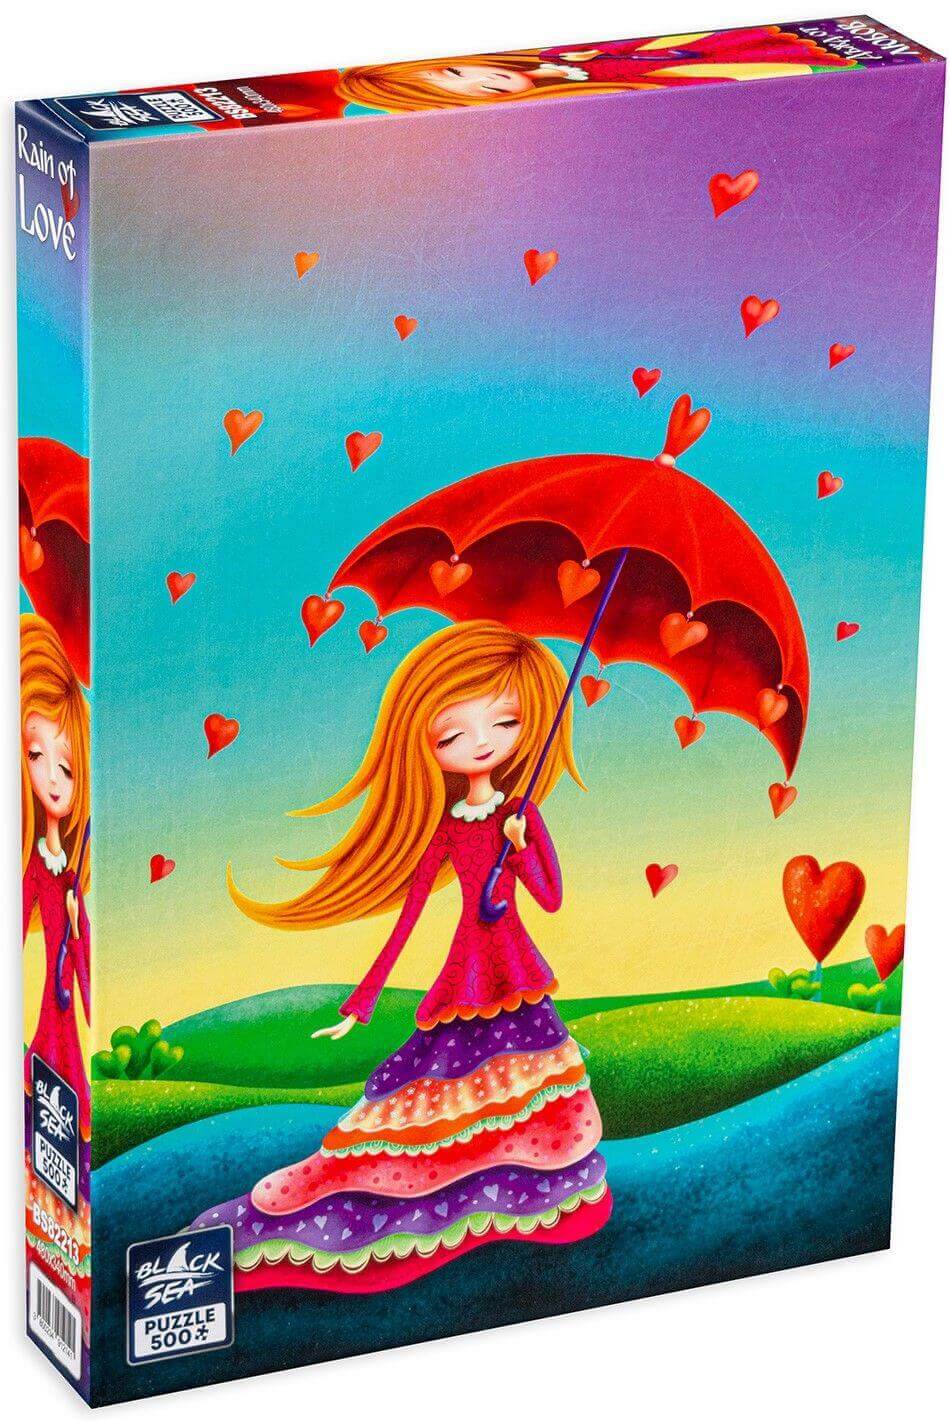 Puzzle Black Sea 500 pieces - Rain of Love, -